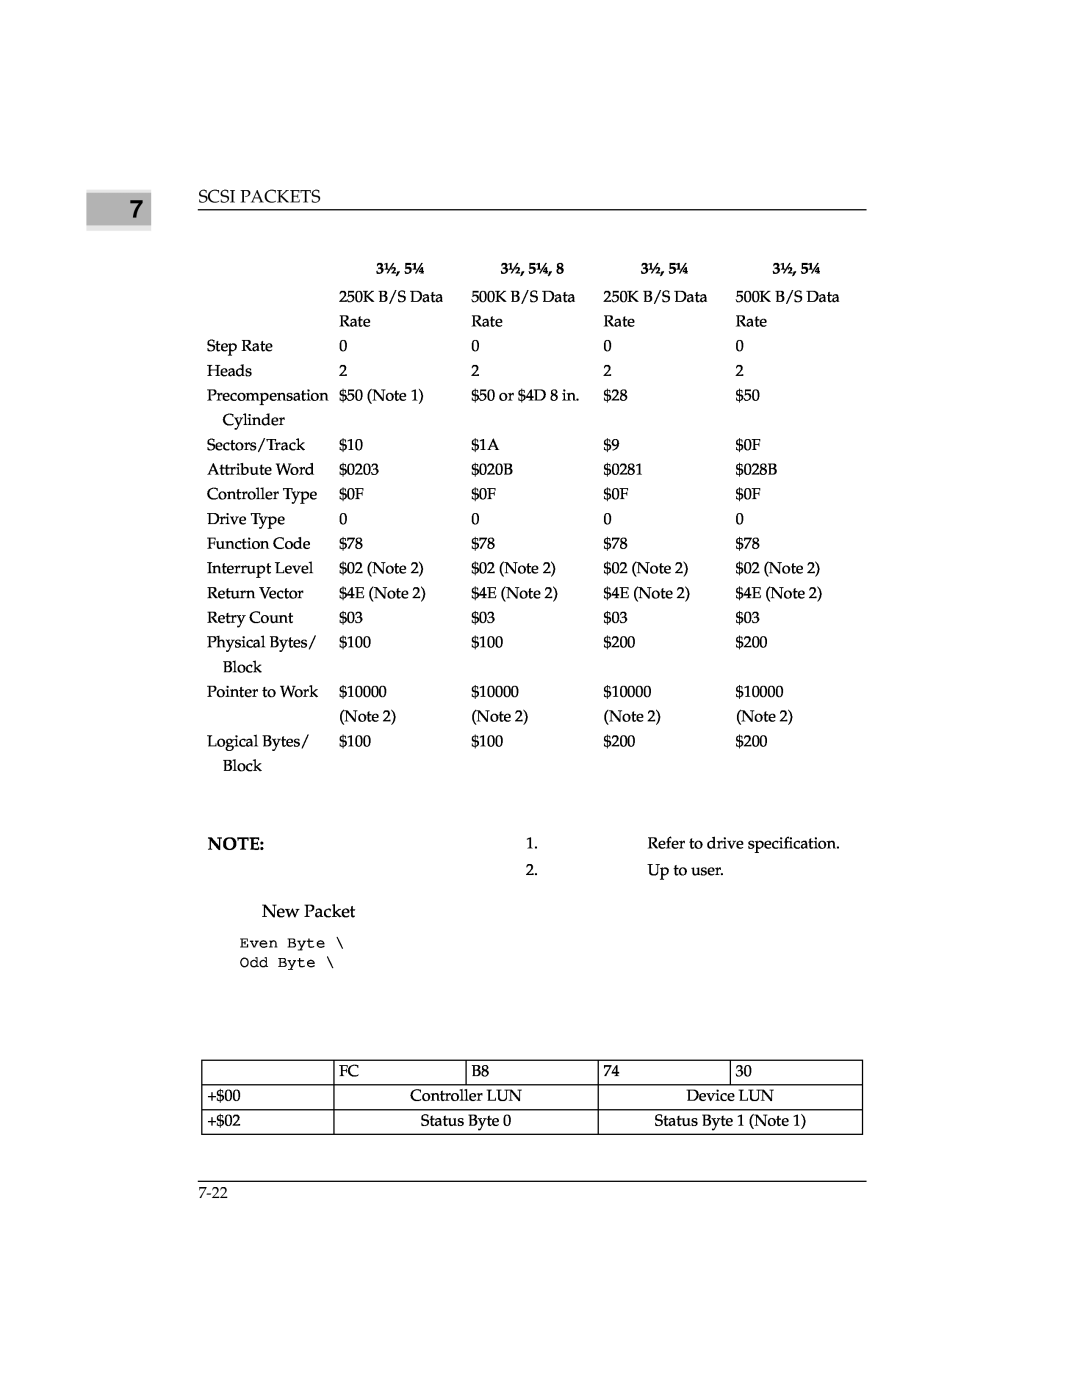 Emerson MVME147 manual 3½, 5¼, 250K B/S Data 